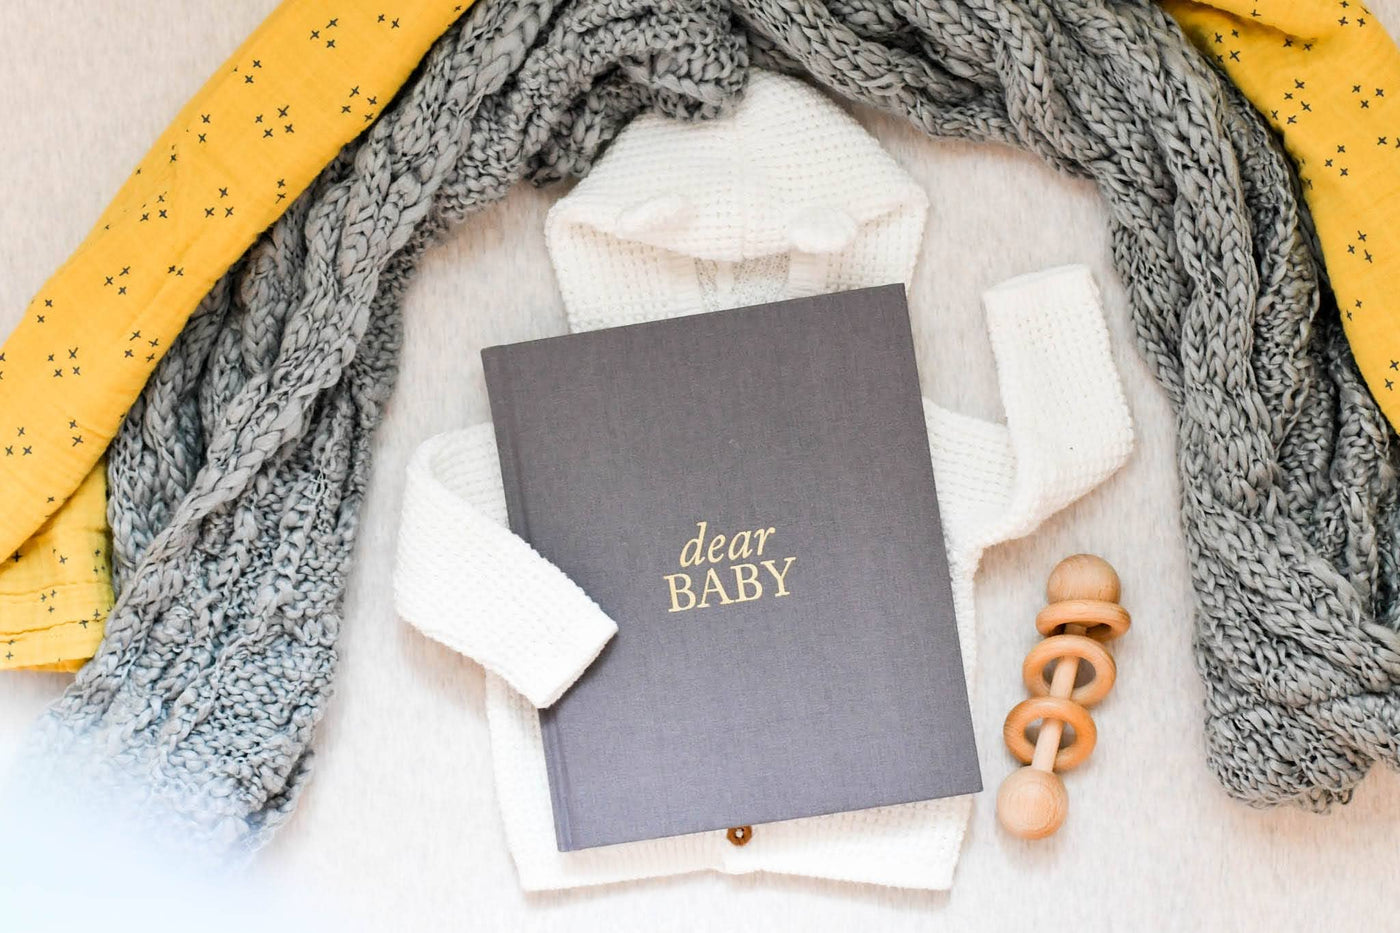 Dear Baby: A Pregnancy Prayer Journal & Memory Book For Mom